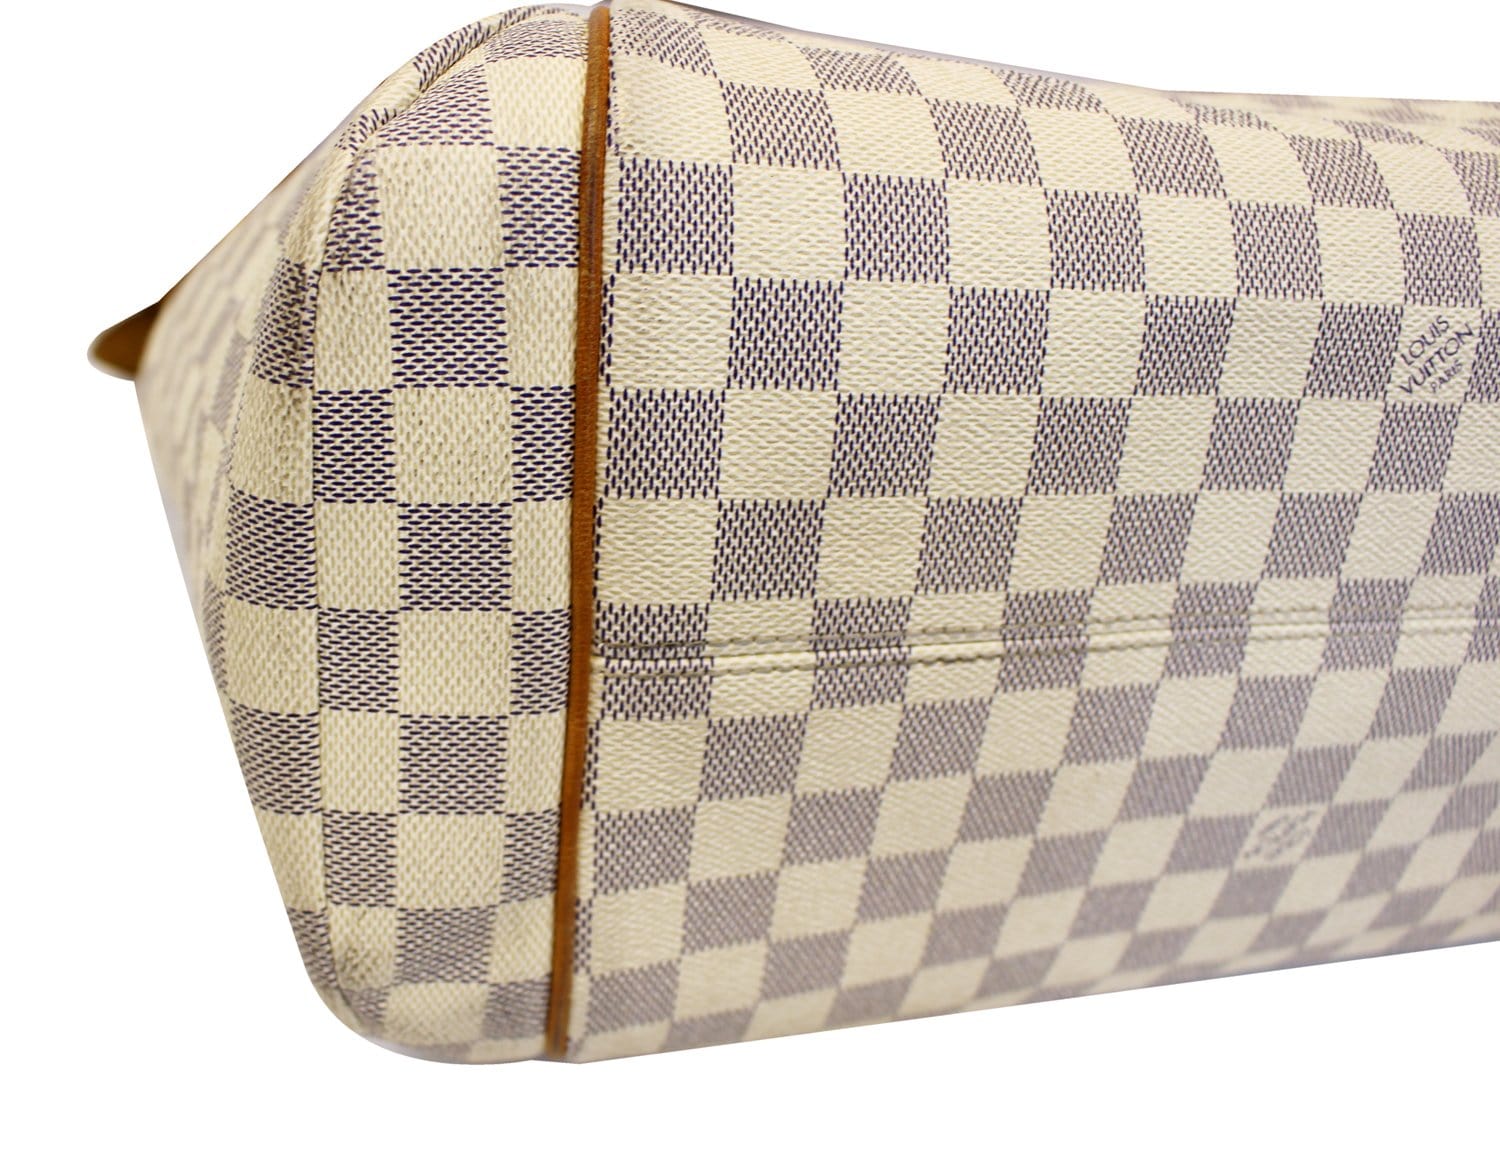 Totally GM Damier Azur – Keeks Designer Handbags